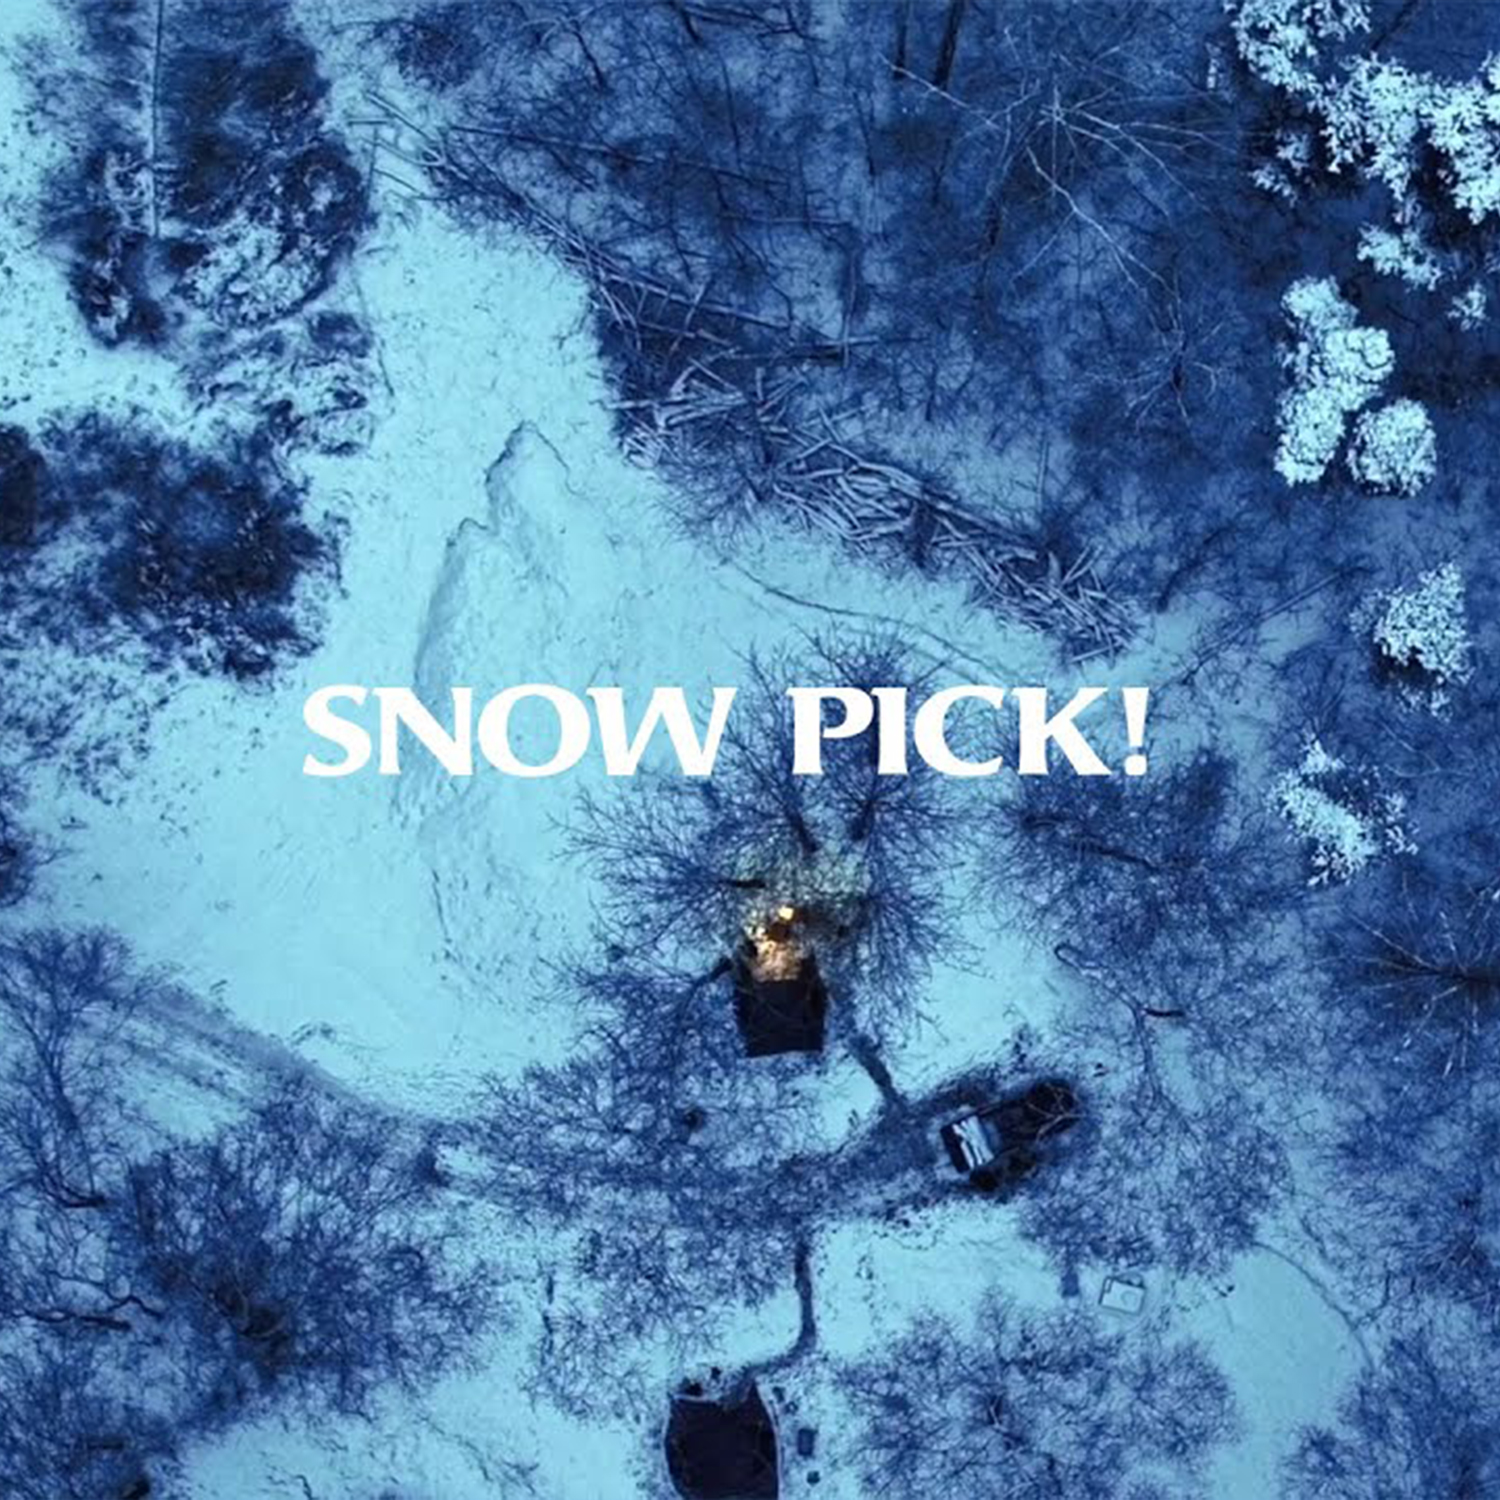 Snow Pick! 텐트 밖은 설국이었다 (2/2) [동계캠핑]